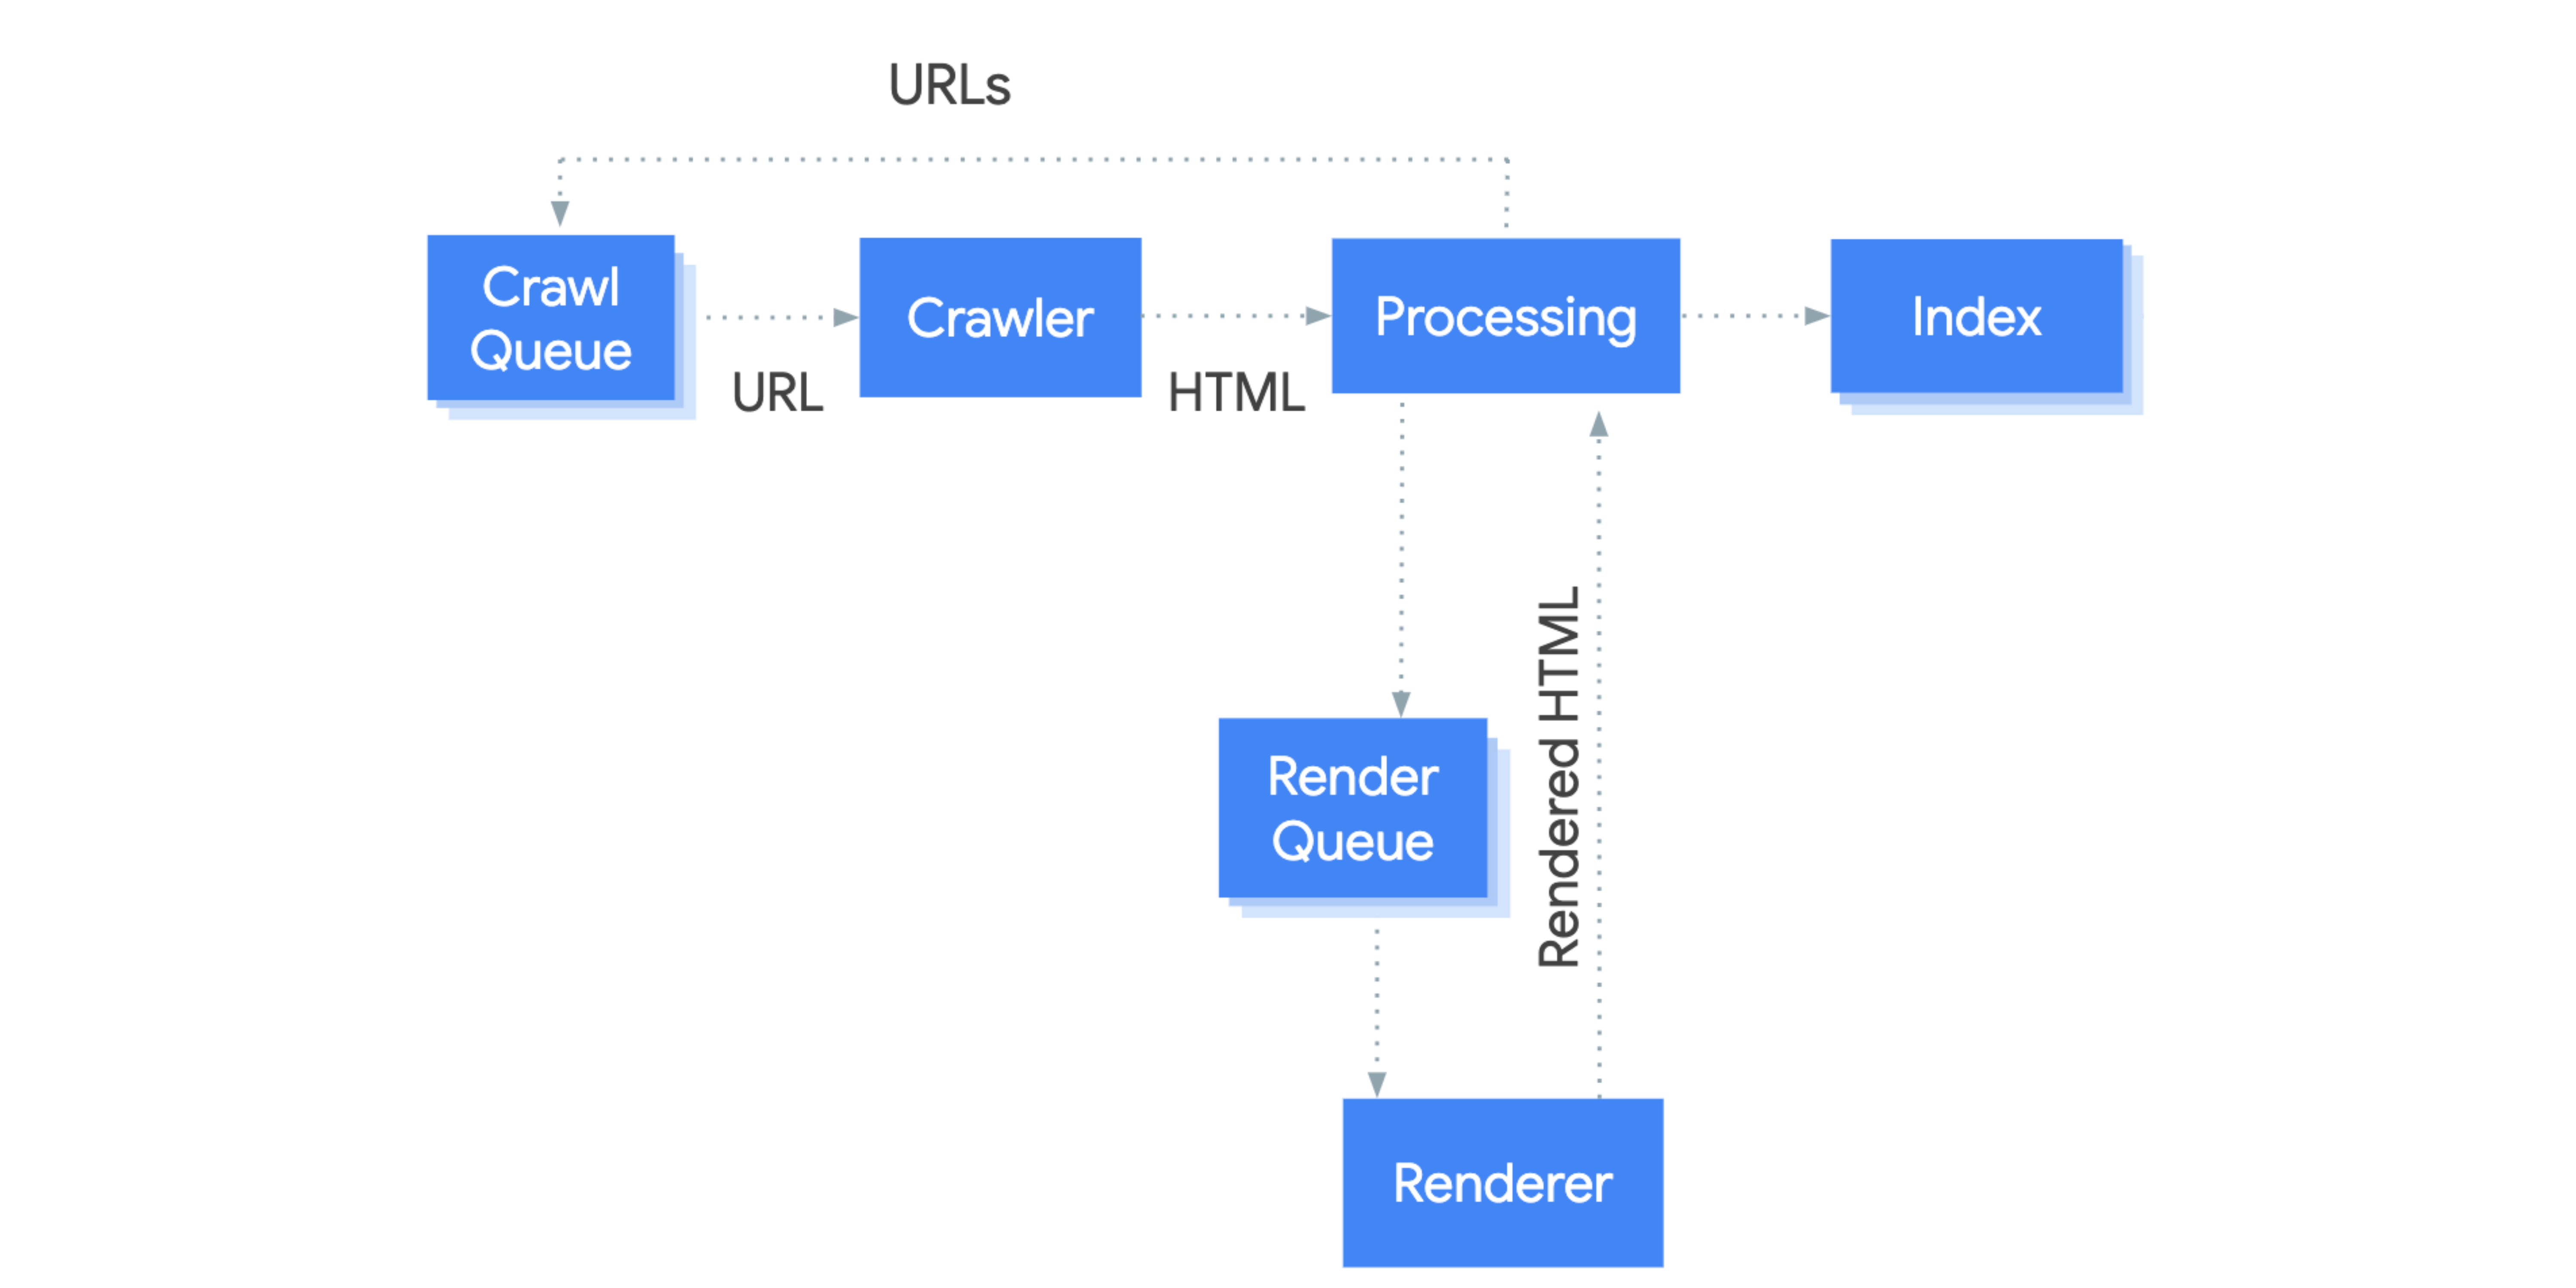 Googles process to crawl. Source: [Google](https://developers.google.com/search/docs/guides/javascript-seo-basics).